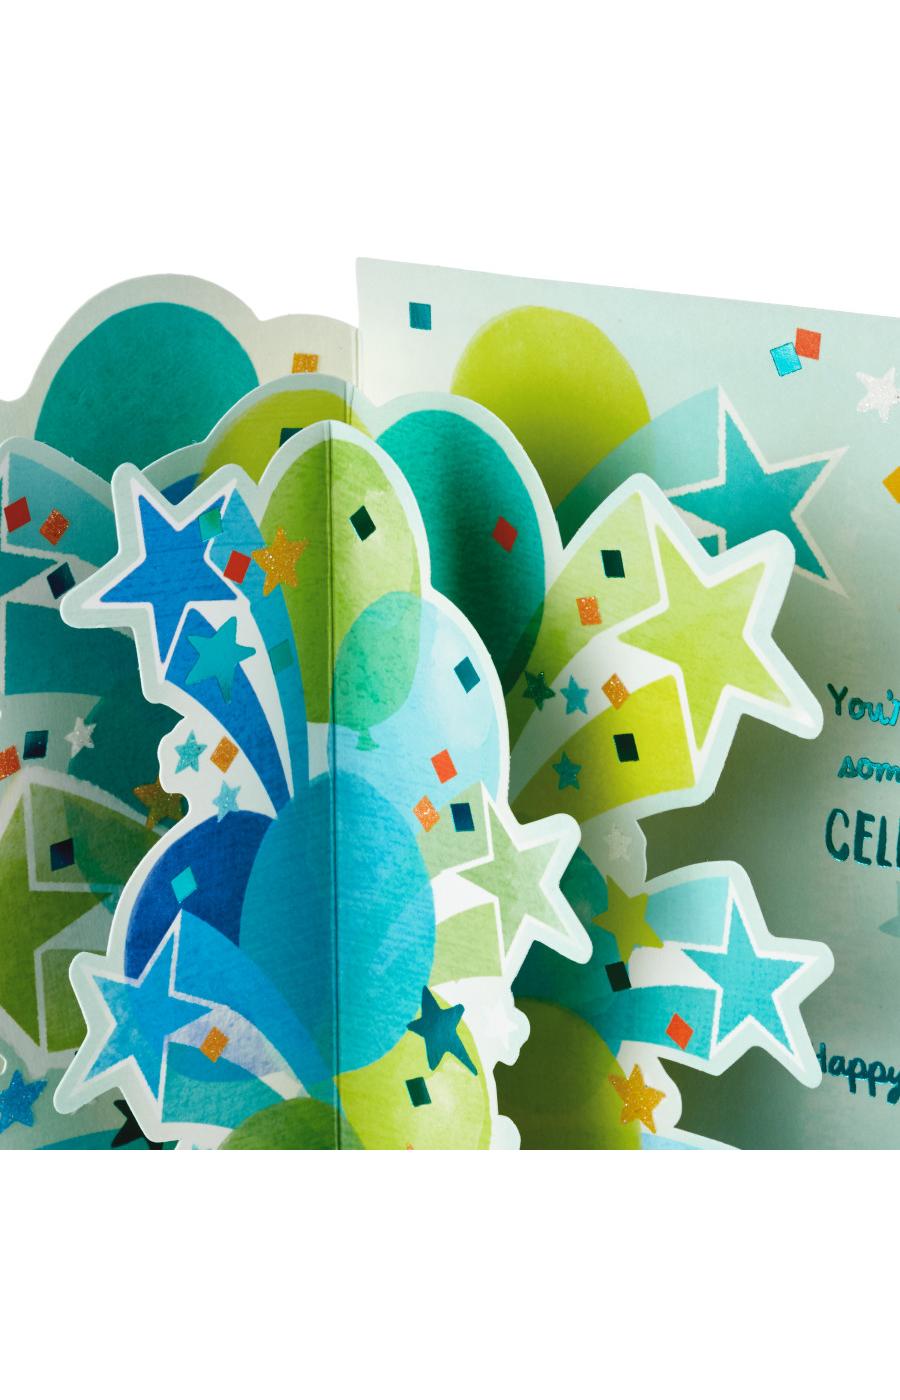 Hallmark Someone to Celebrate Paper Wonder Pop-Up Birthday Card - E50, E14; image 4 of 7